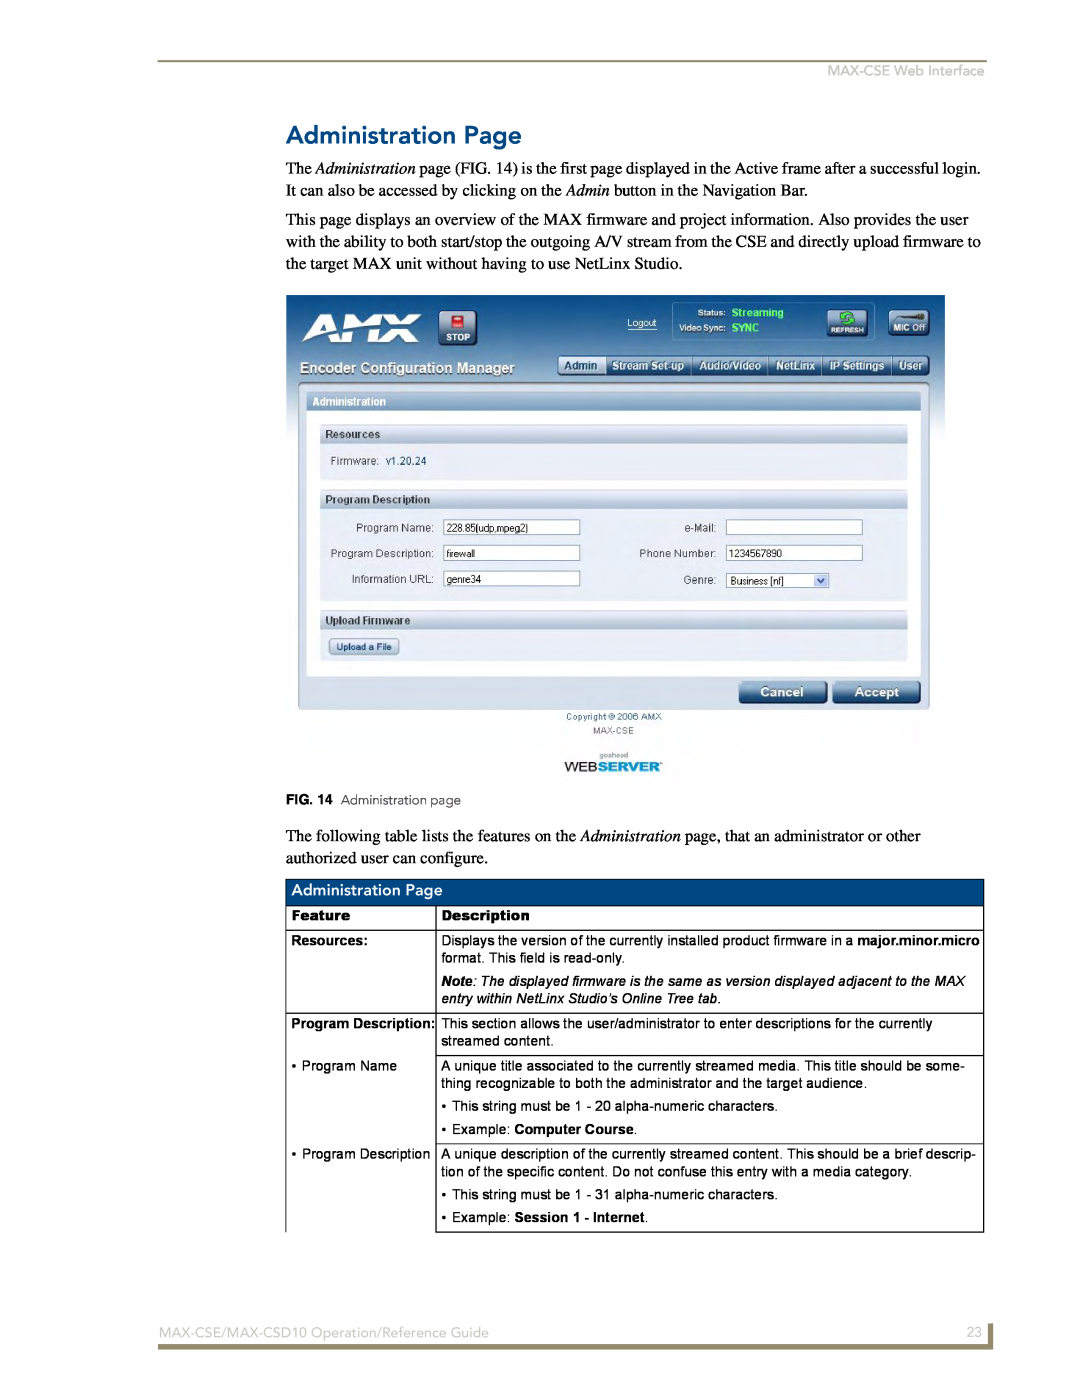 AMX MAX-CSD 10, MAX-CSE manual Administration Page 